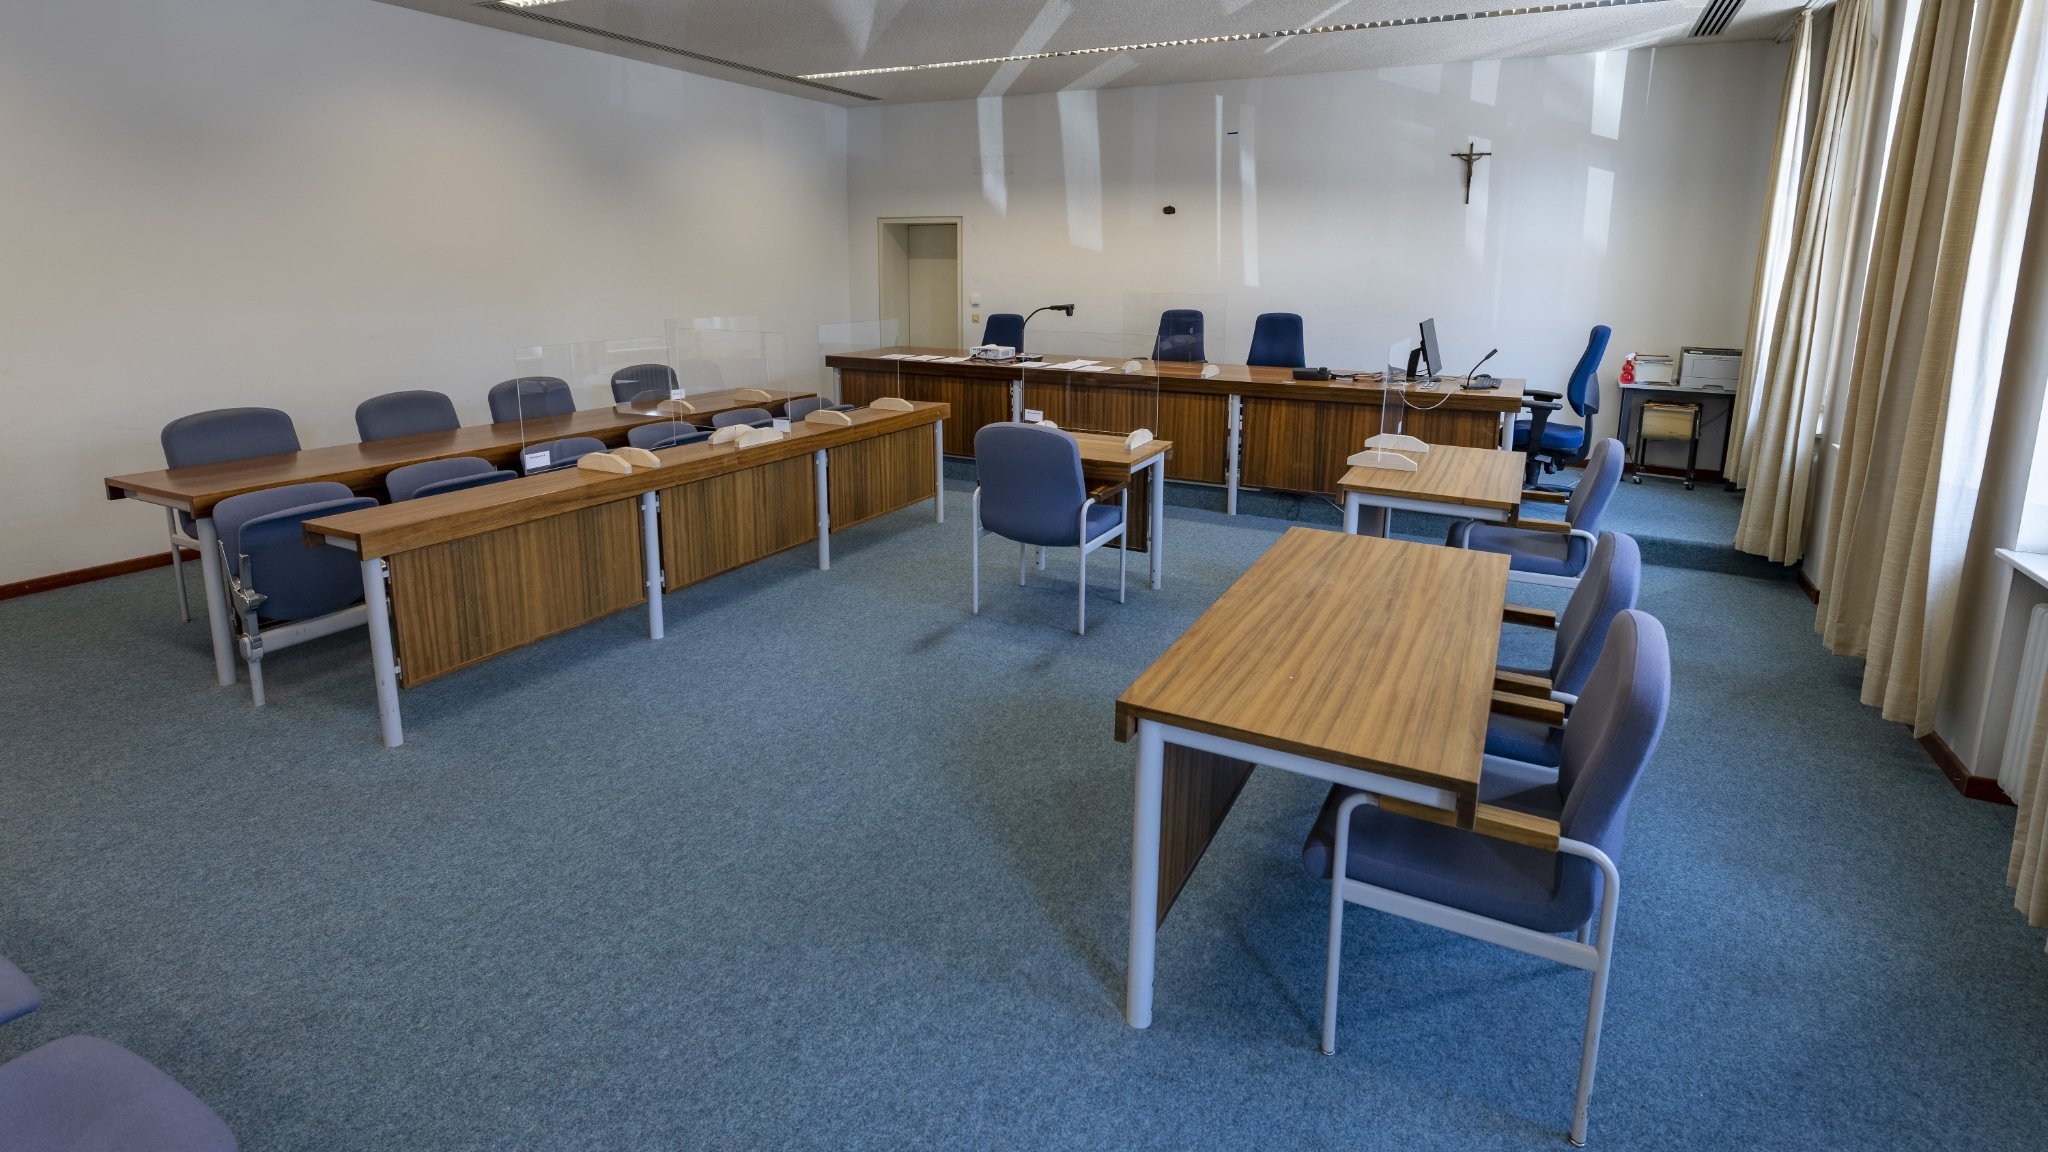 Sitzungssaal 1 im Amtsgericht Erding, 31.3.2021